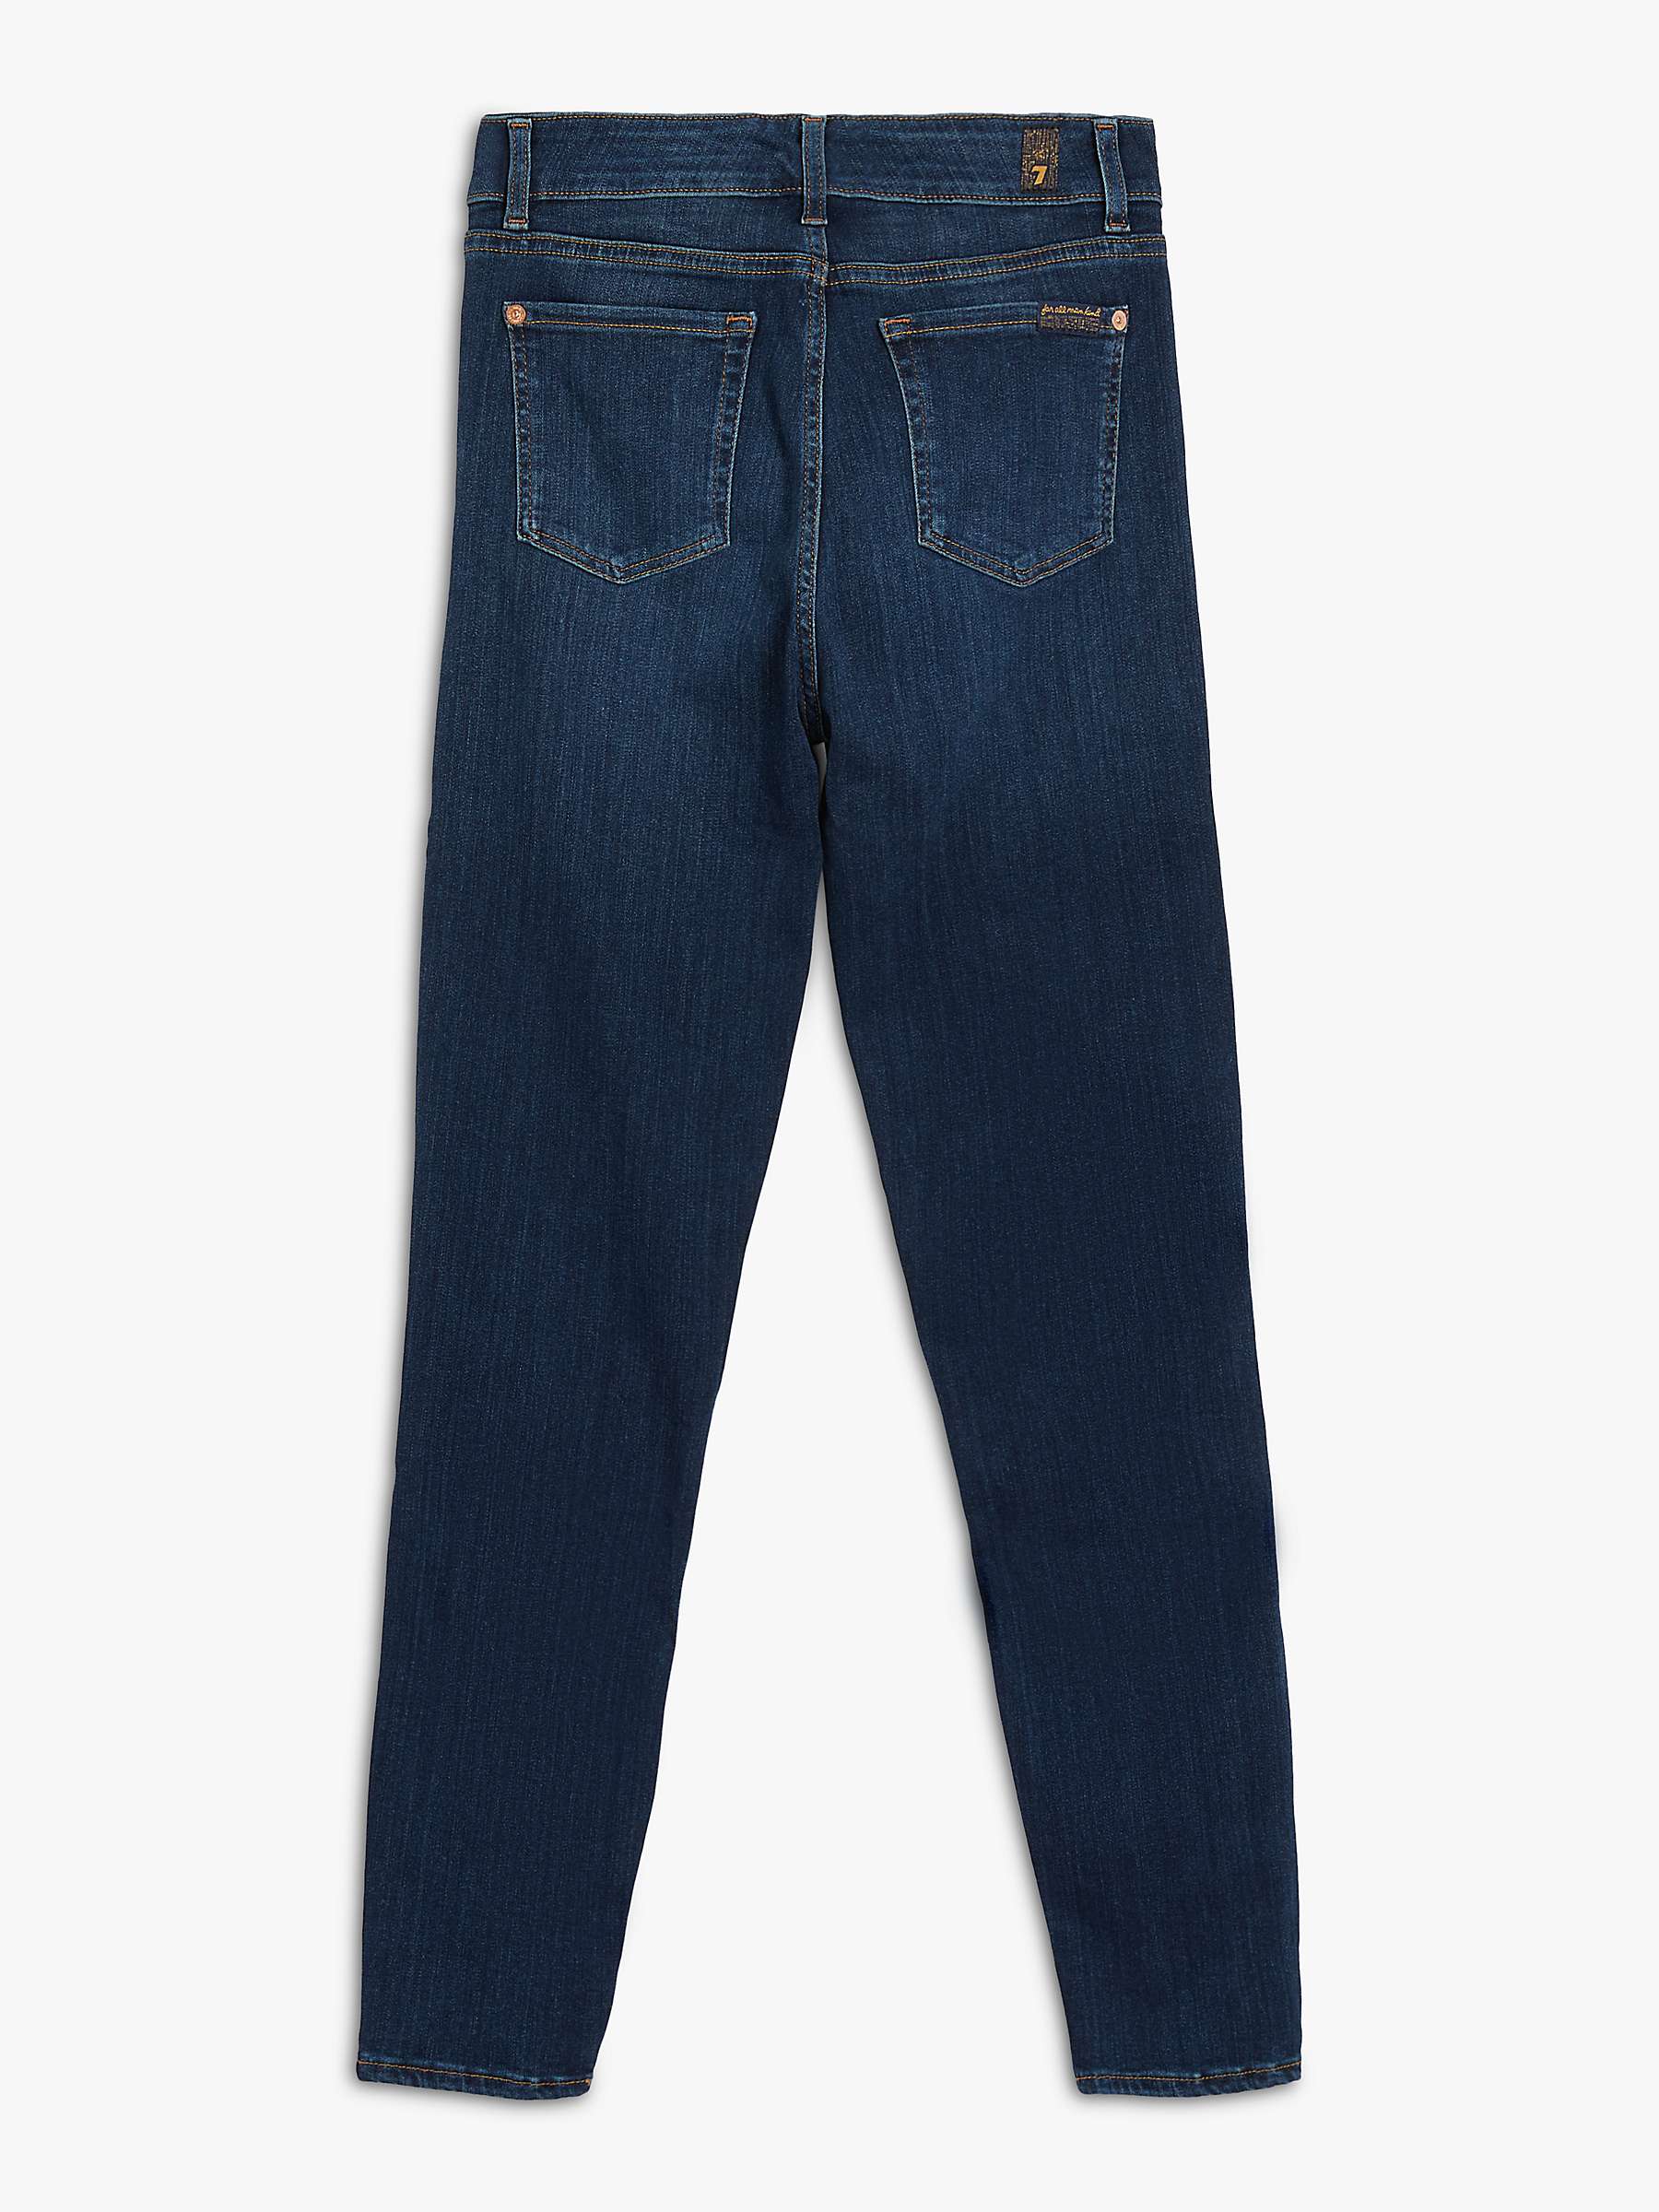 Buy 7 For All Mankind Aubrey Slim Illusion Luxe Jeans, Dark Blue Online at johnlewis.com